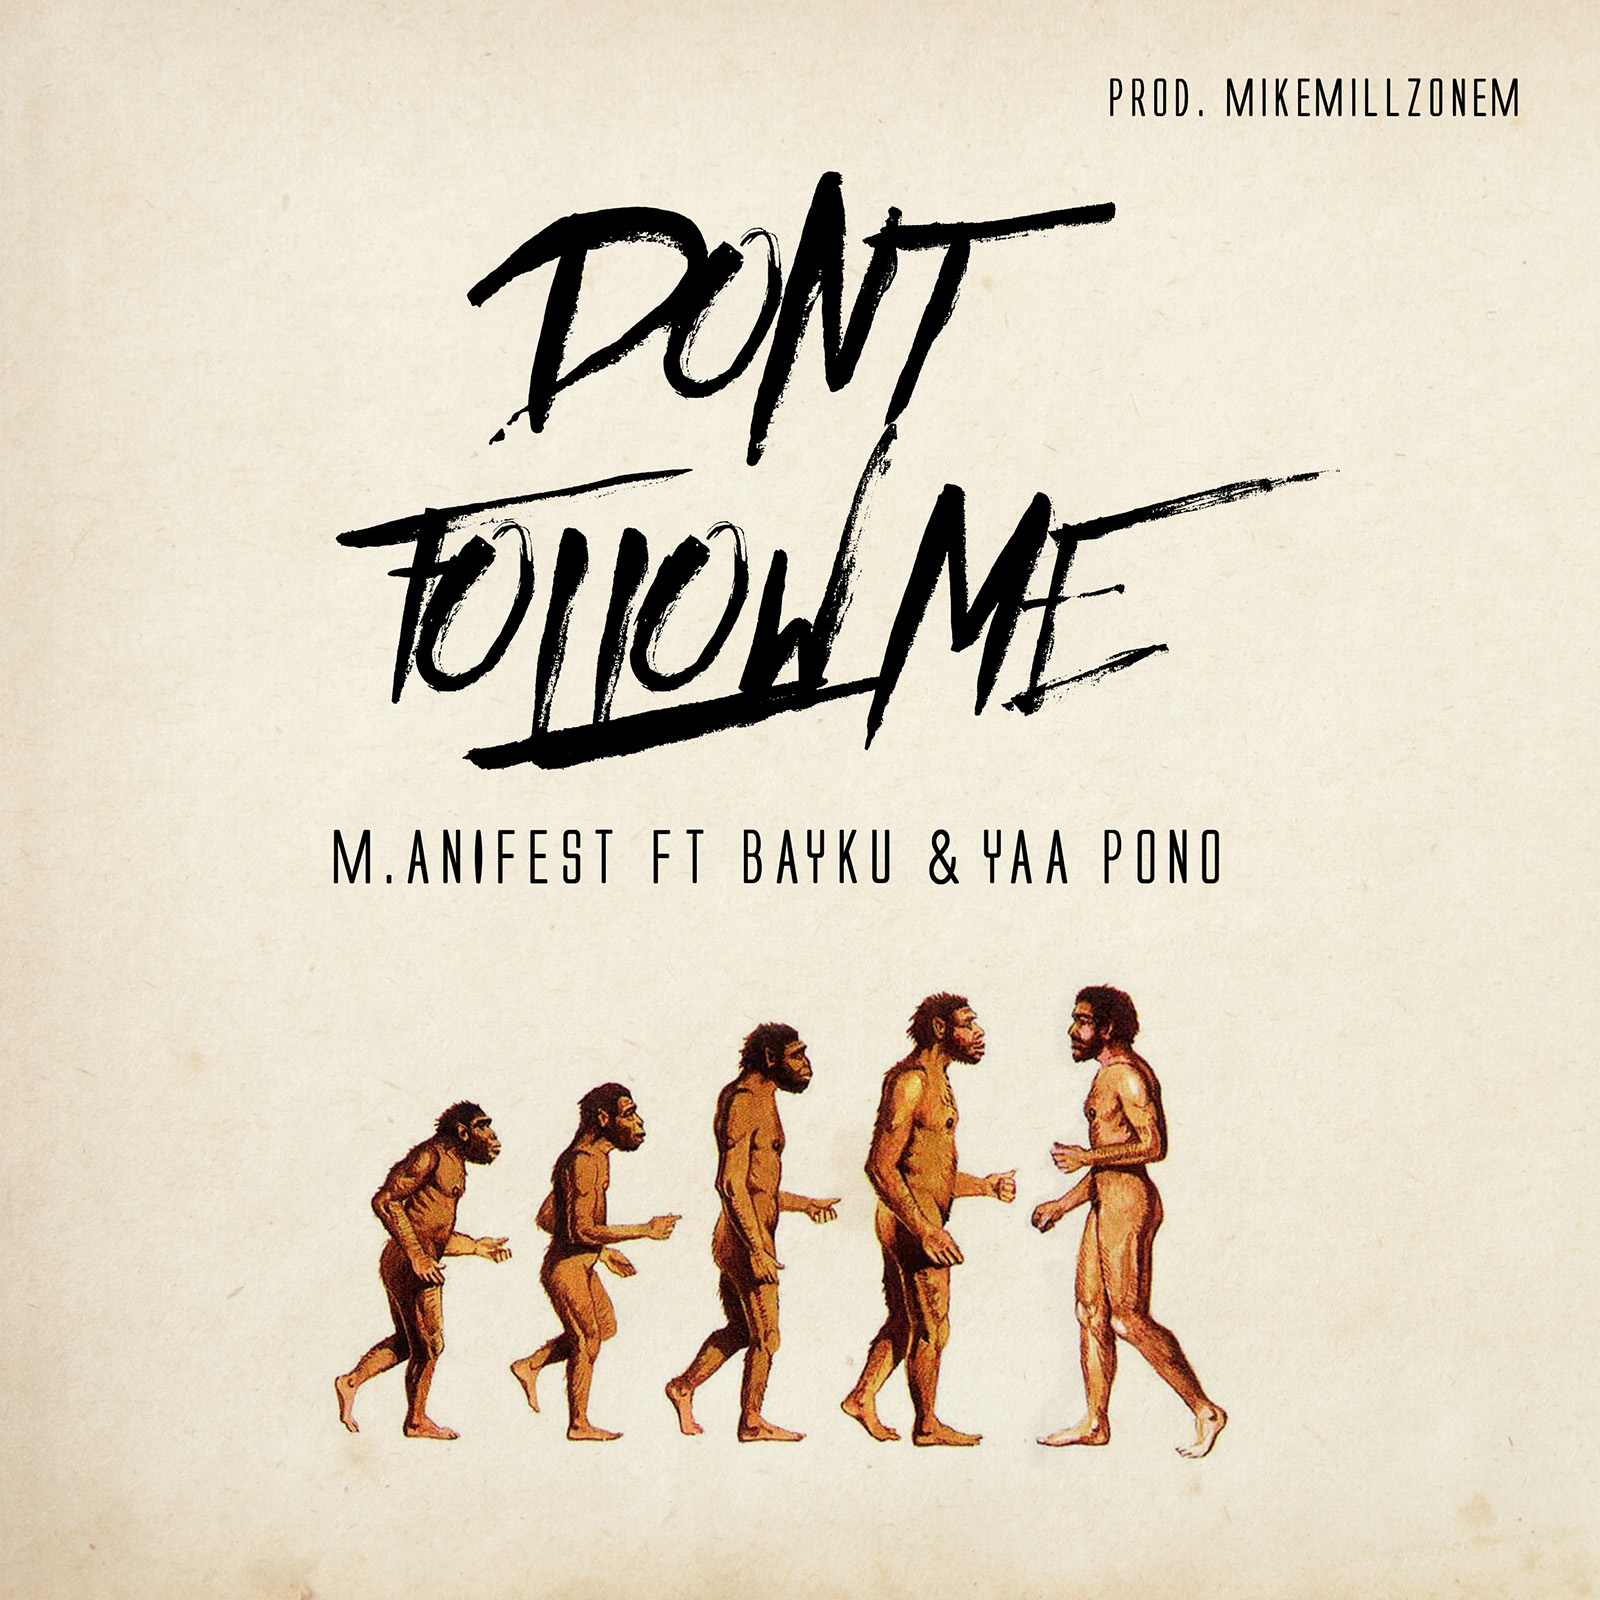 Don't Follow Me by M.anifest feat. Bayku & Yaa Pono